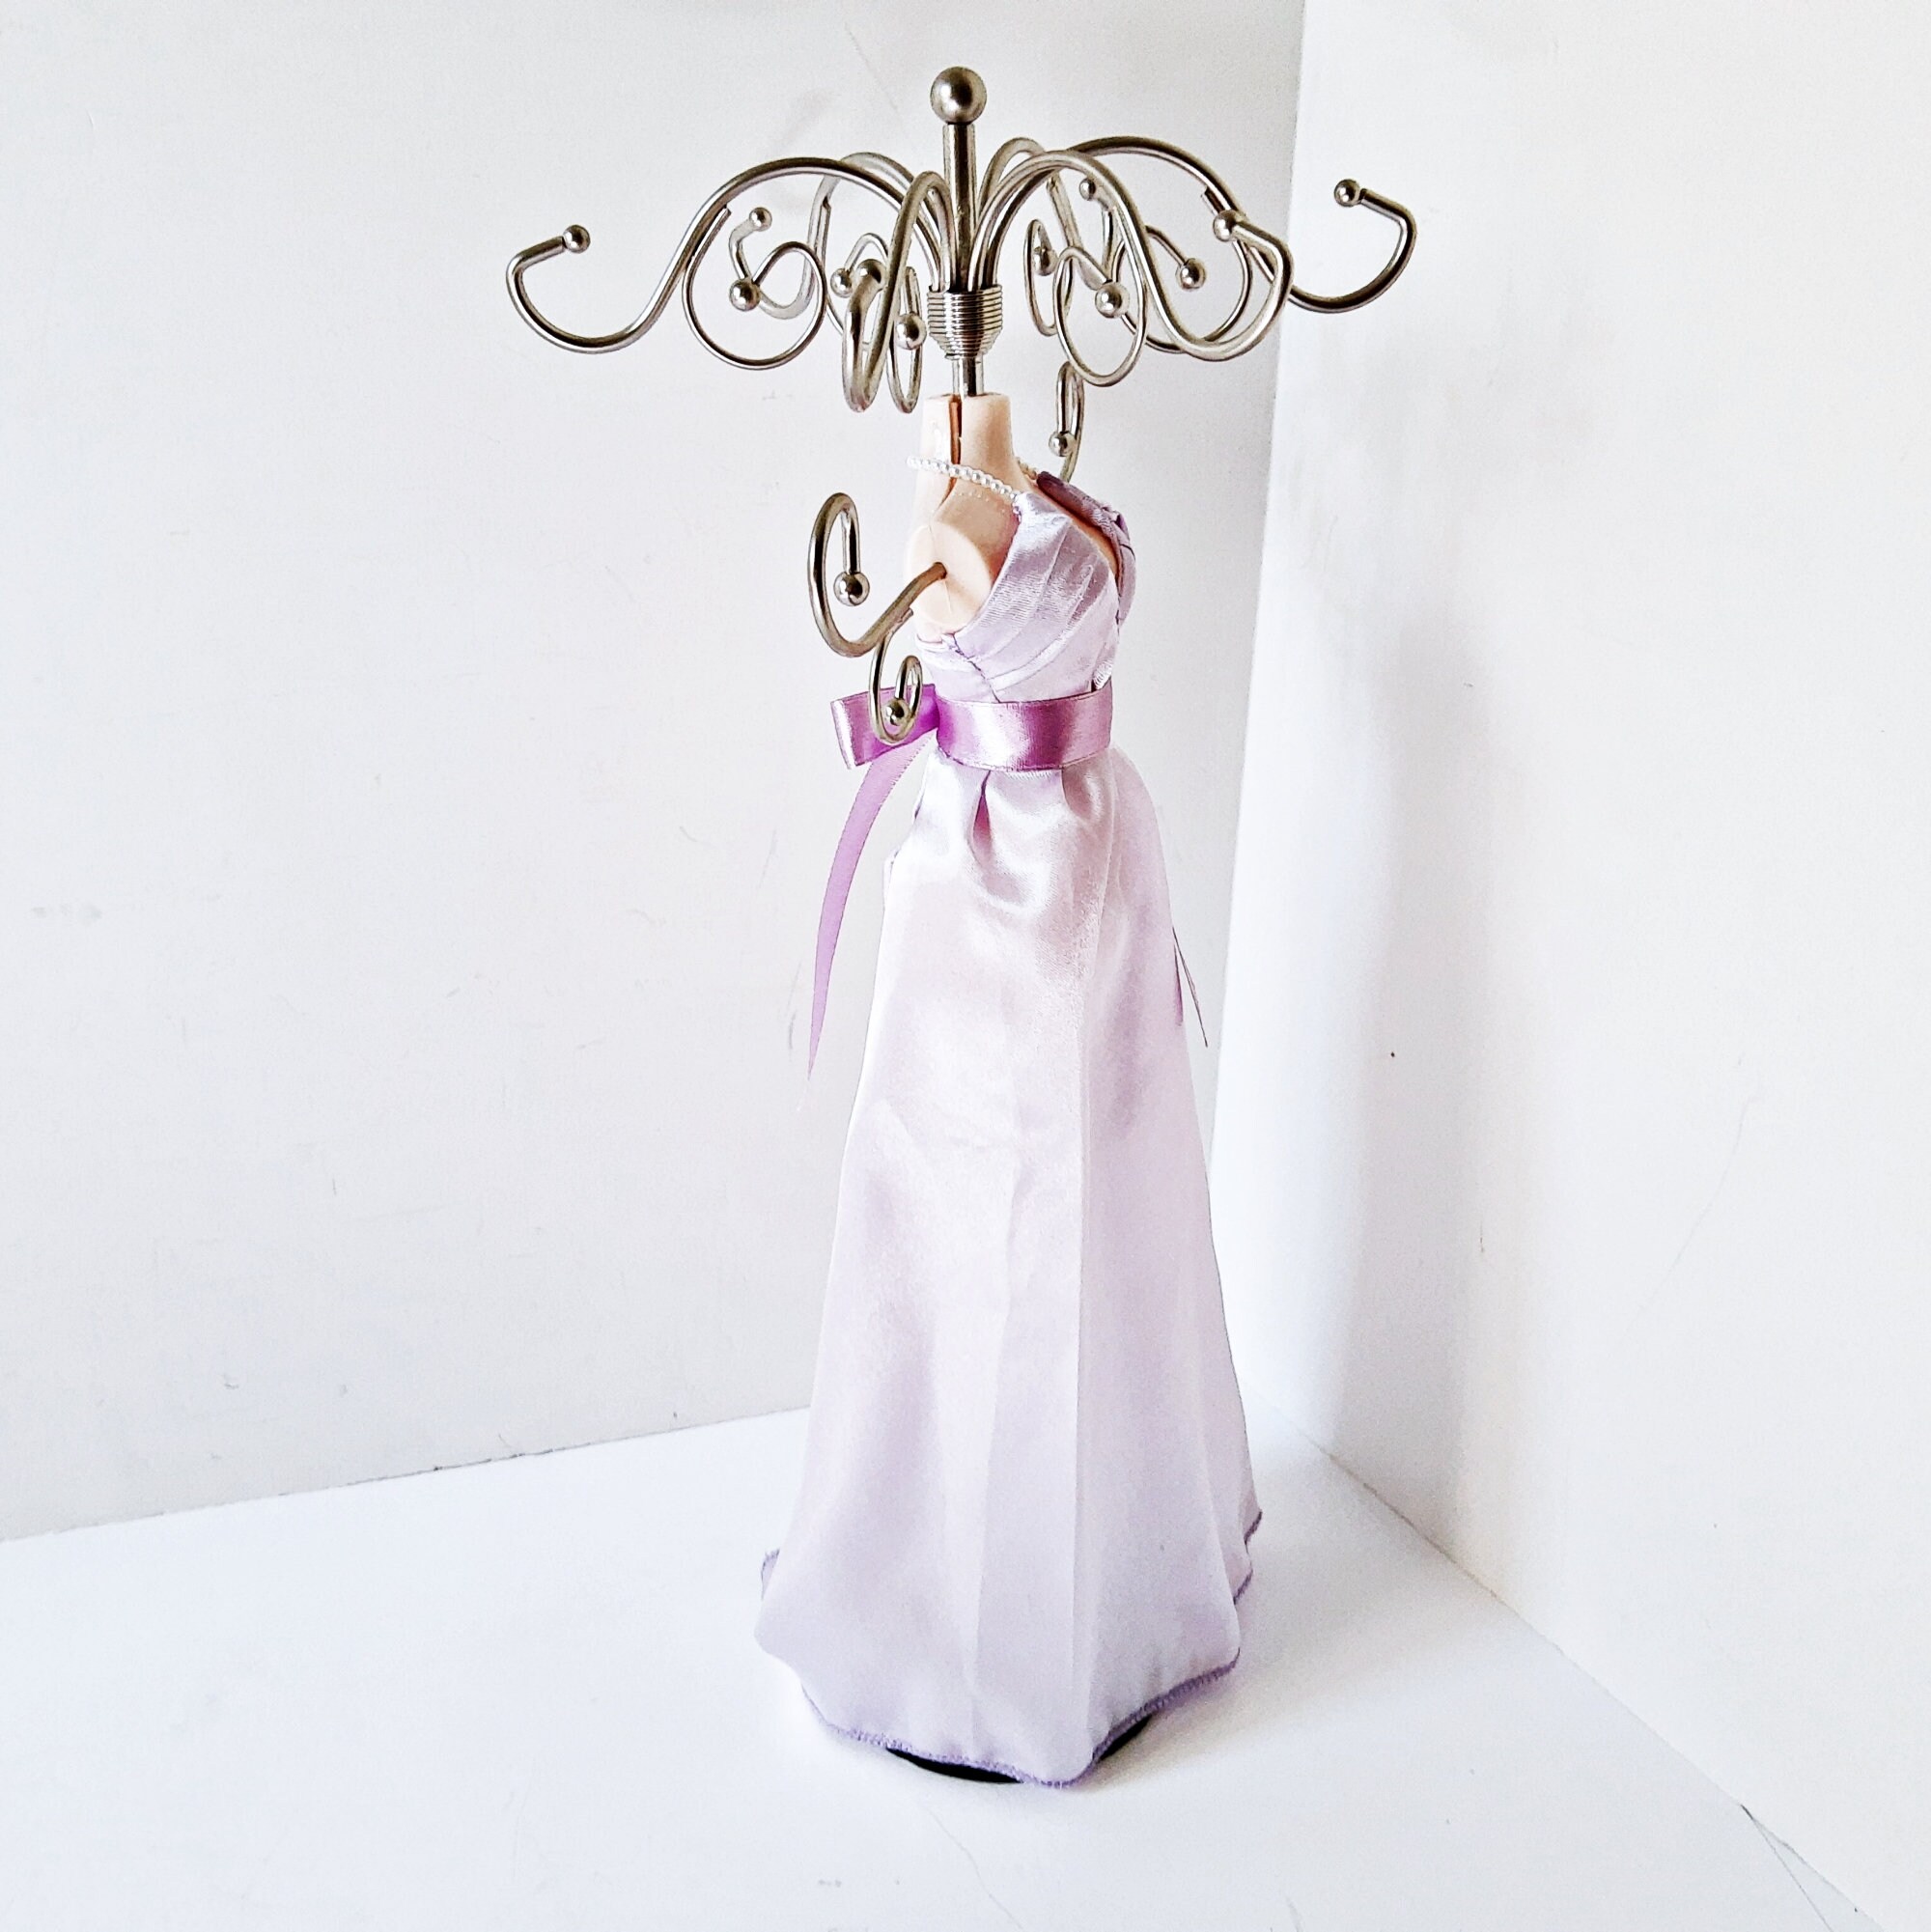 4 Piece Vintage Lace Linen Dress Mannequin Jewelry Display Set - Holder &  Stand - Zen Merchandiser